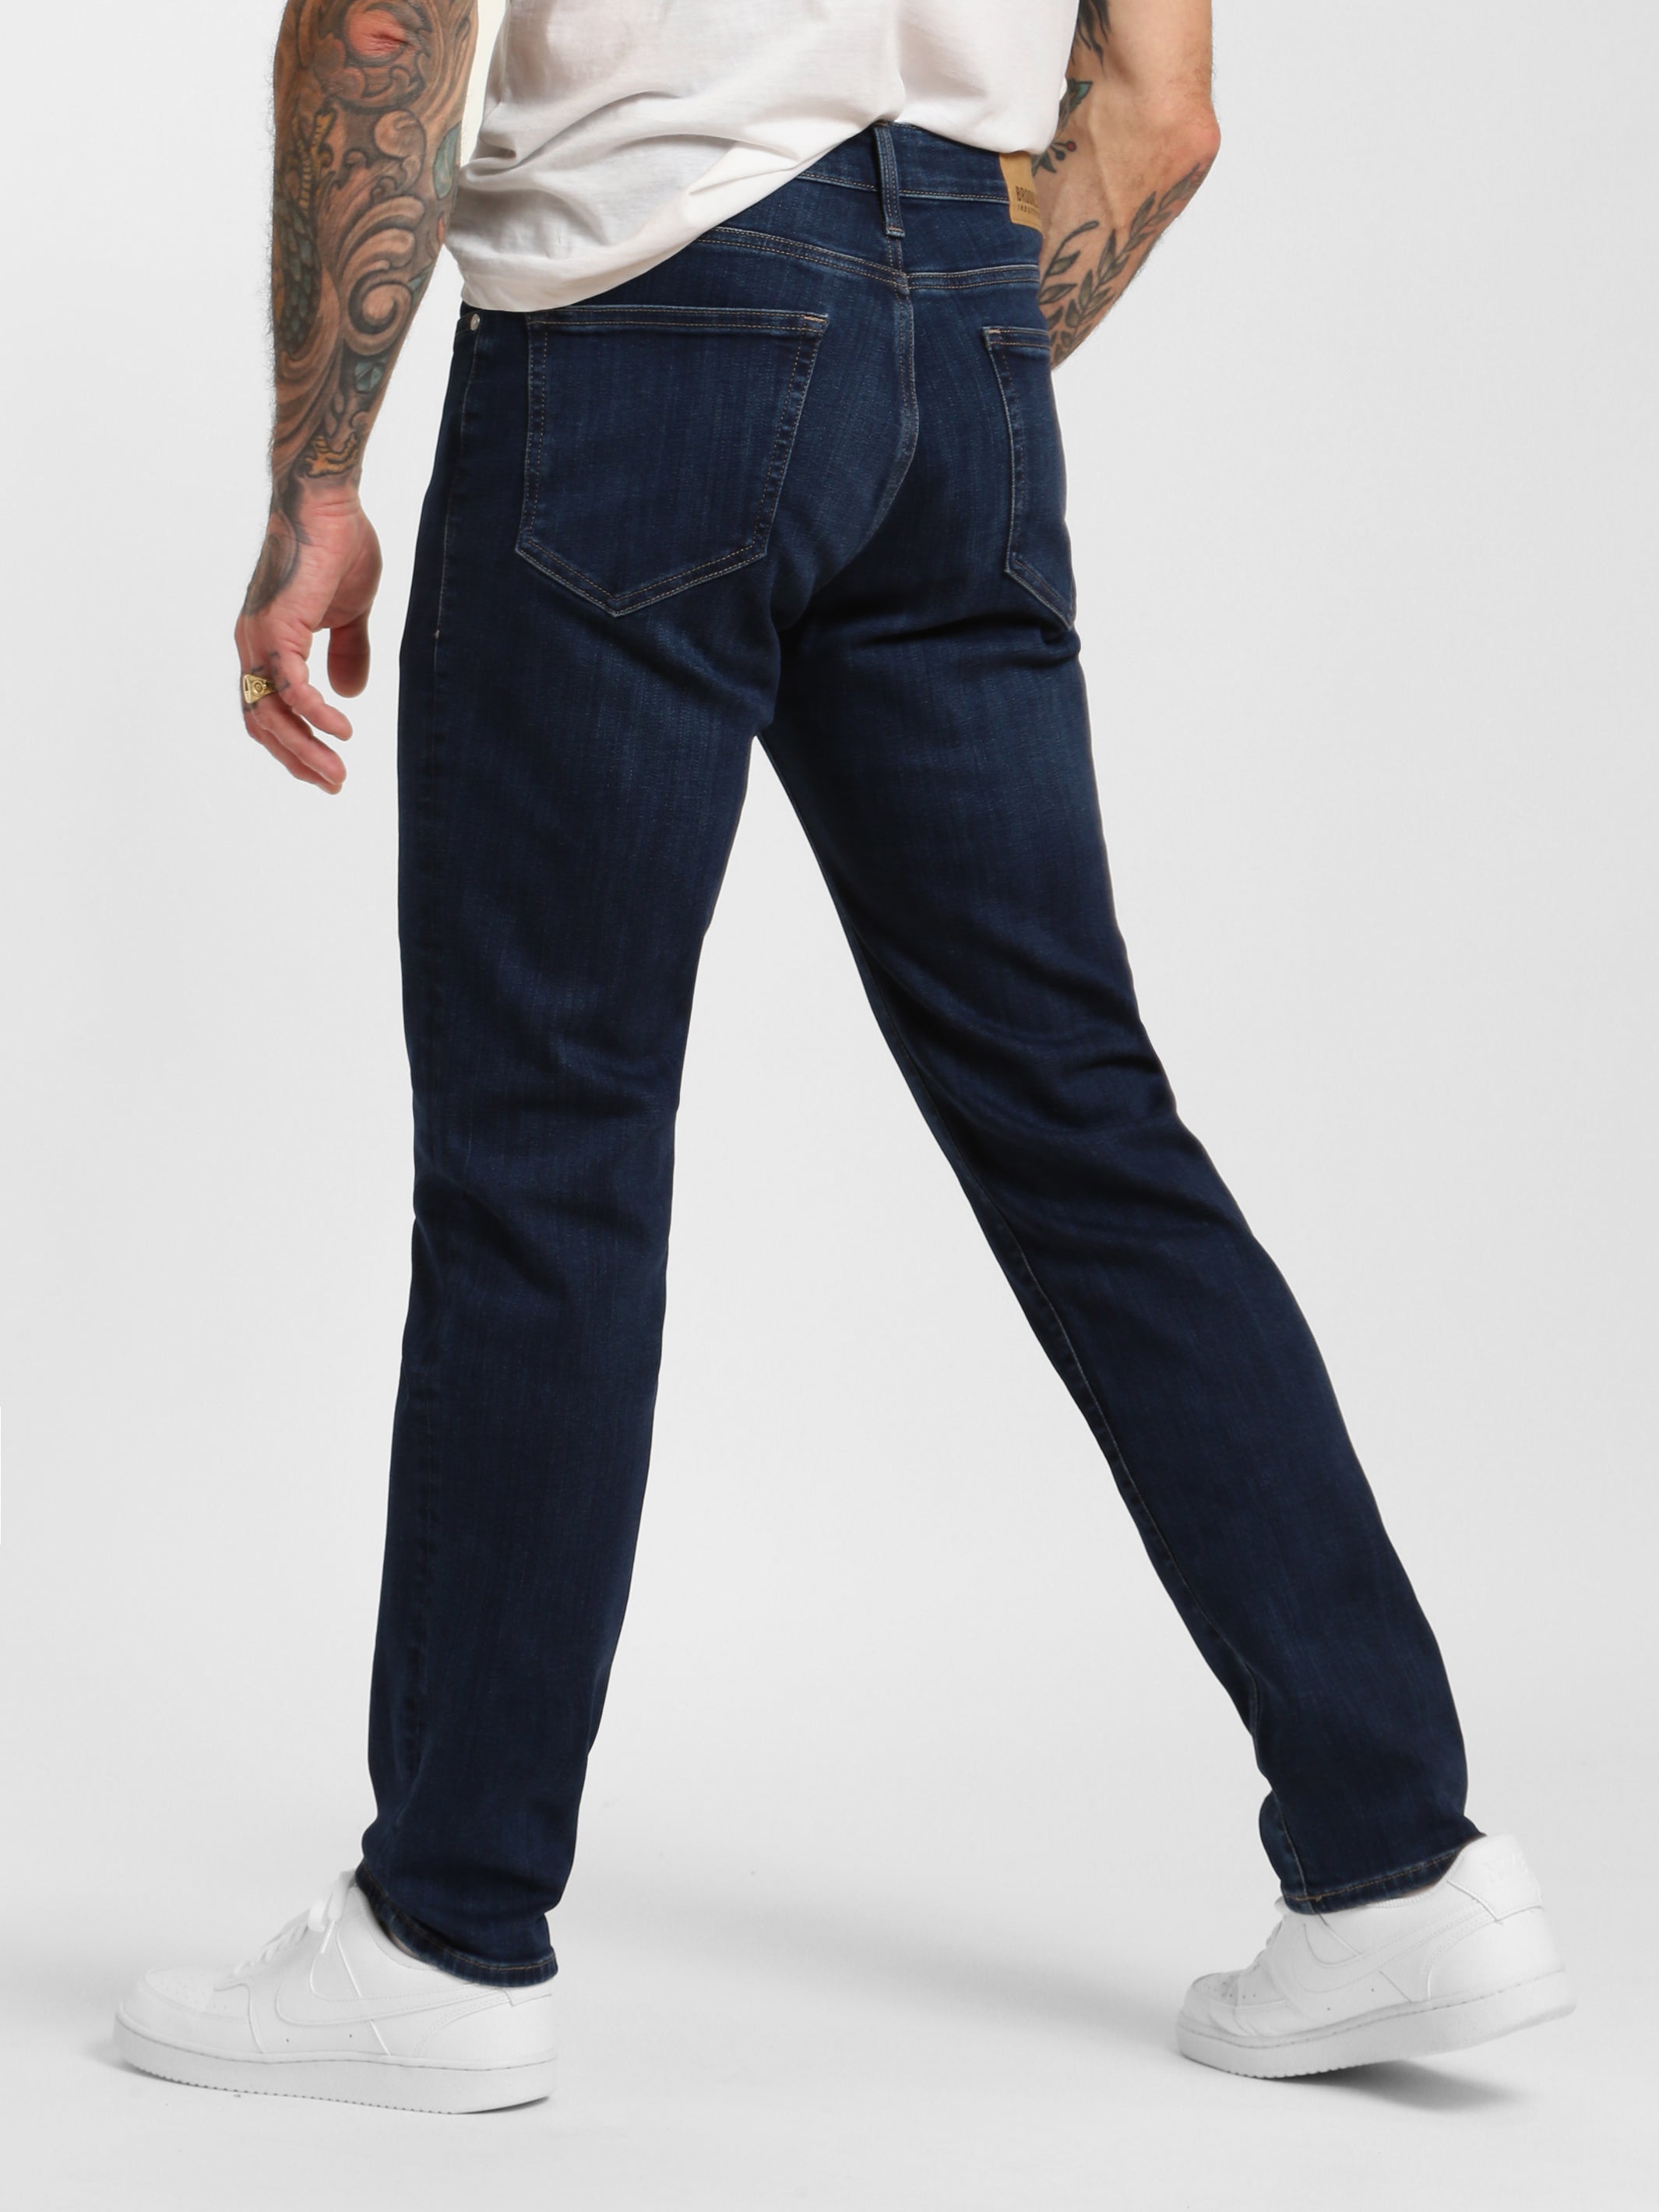 Brooklyn Industries Men's Franklin Athletic Fit Jeans in Dark Denim